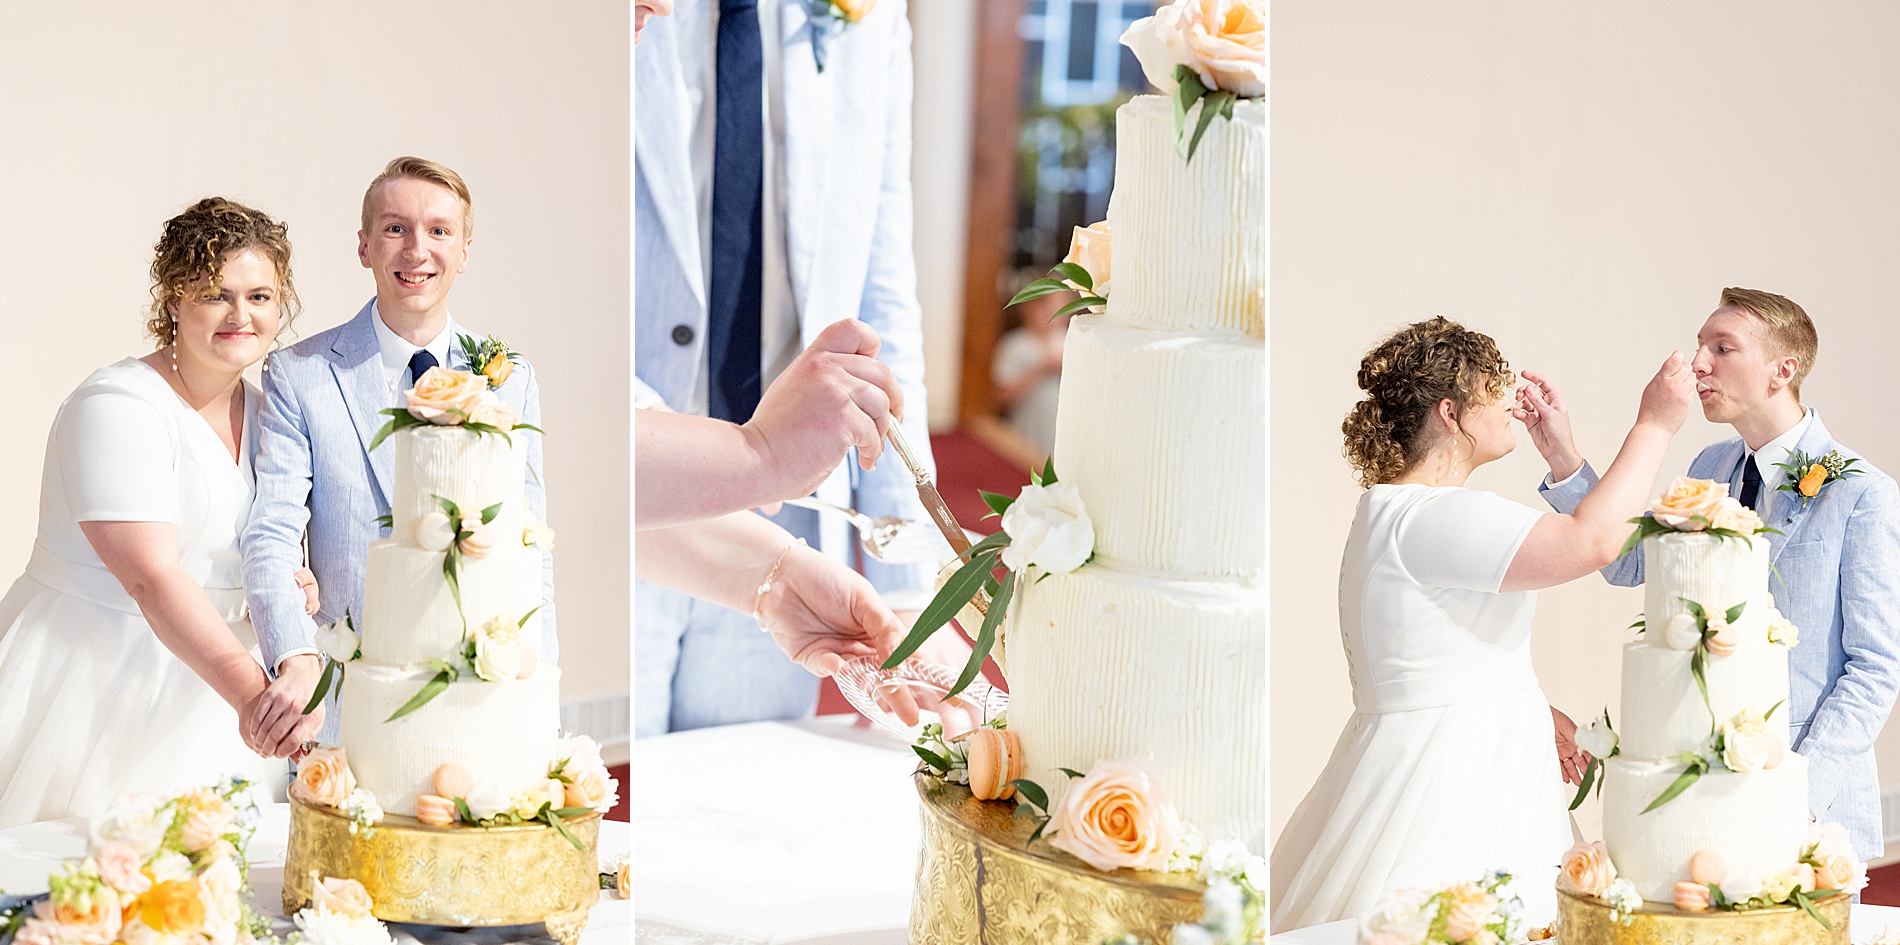 newlyweds eat their wedding cake